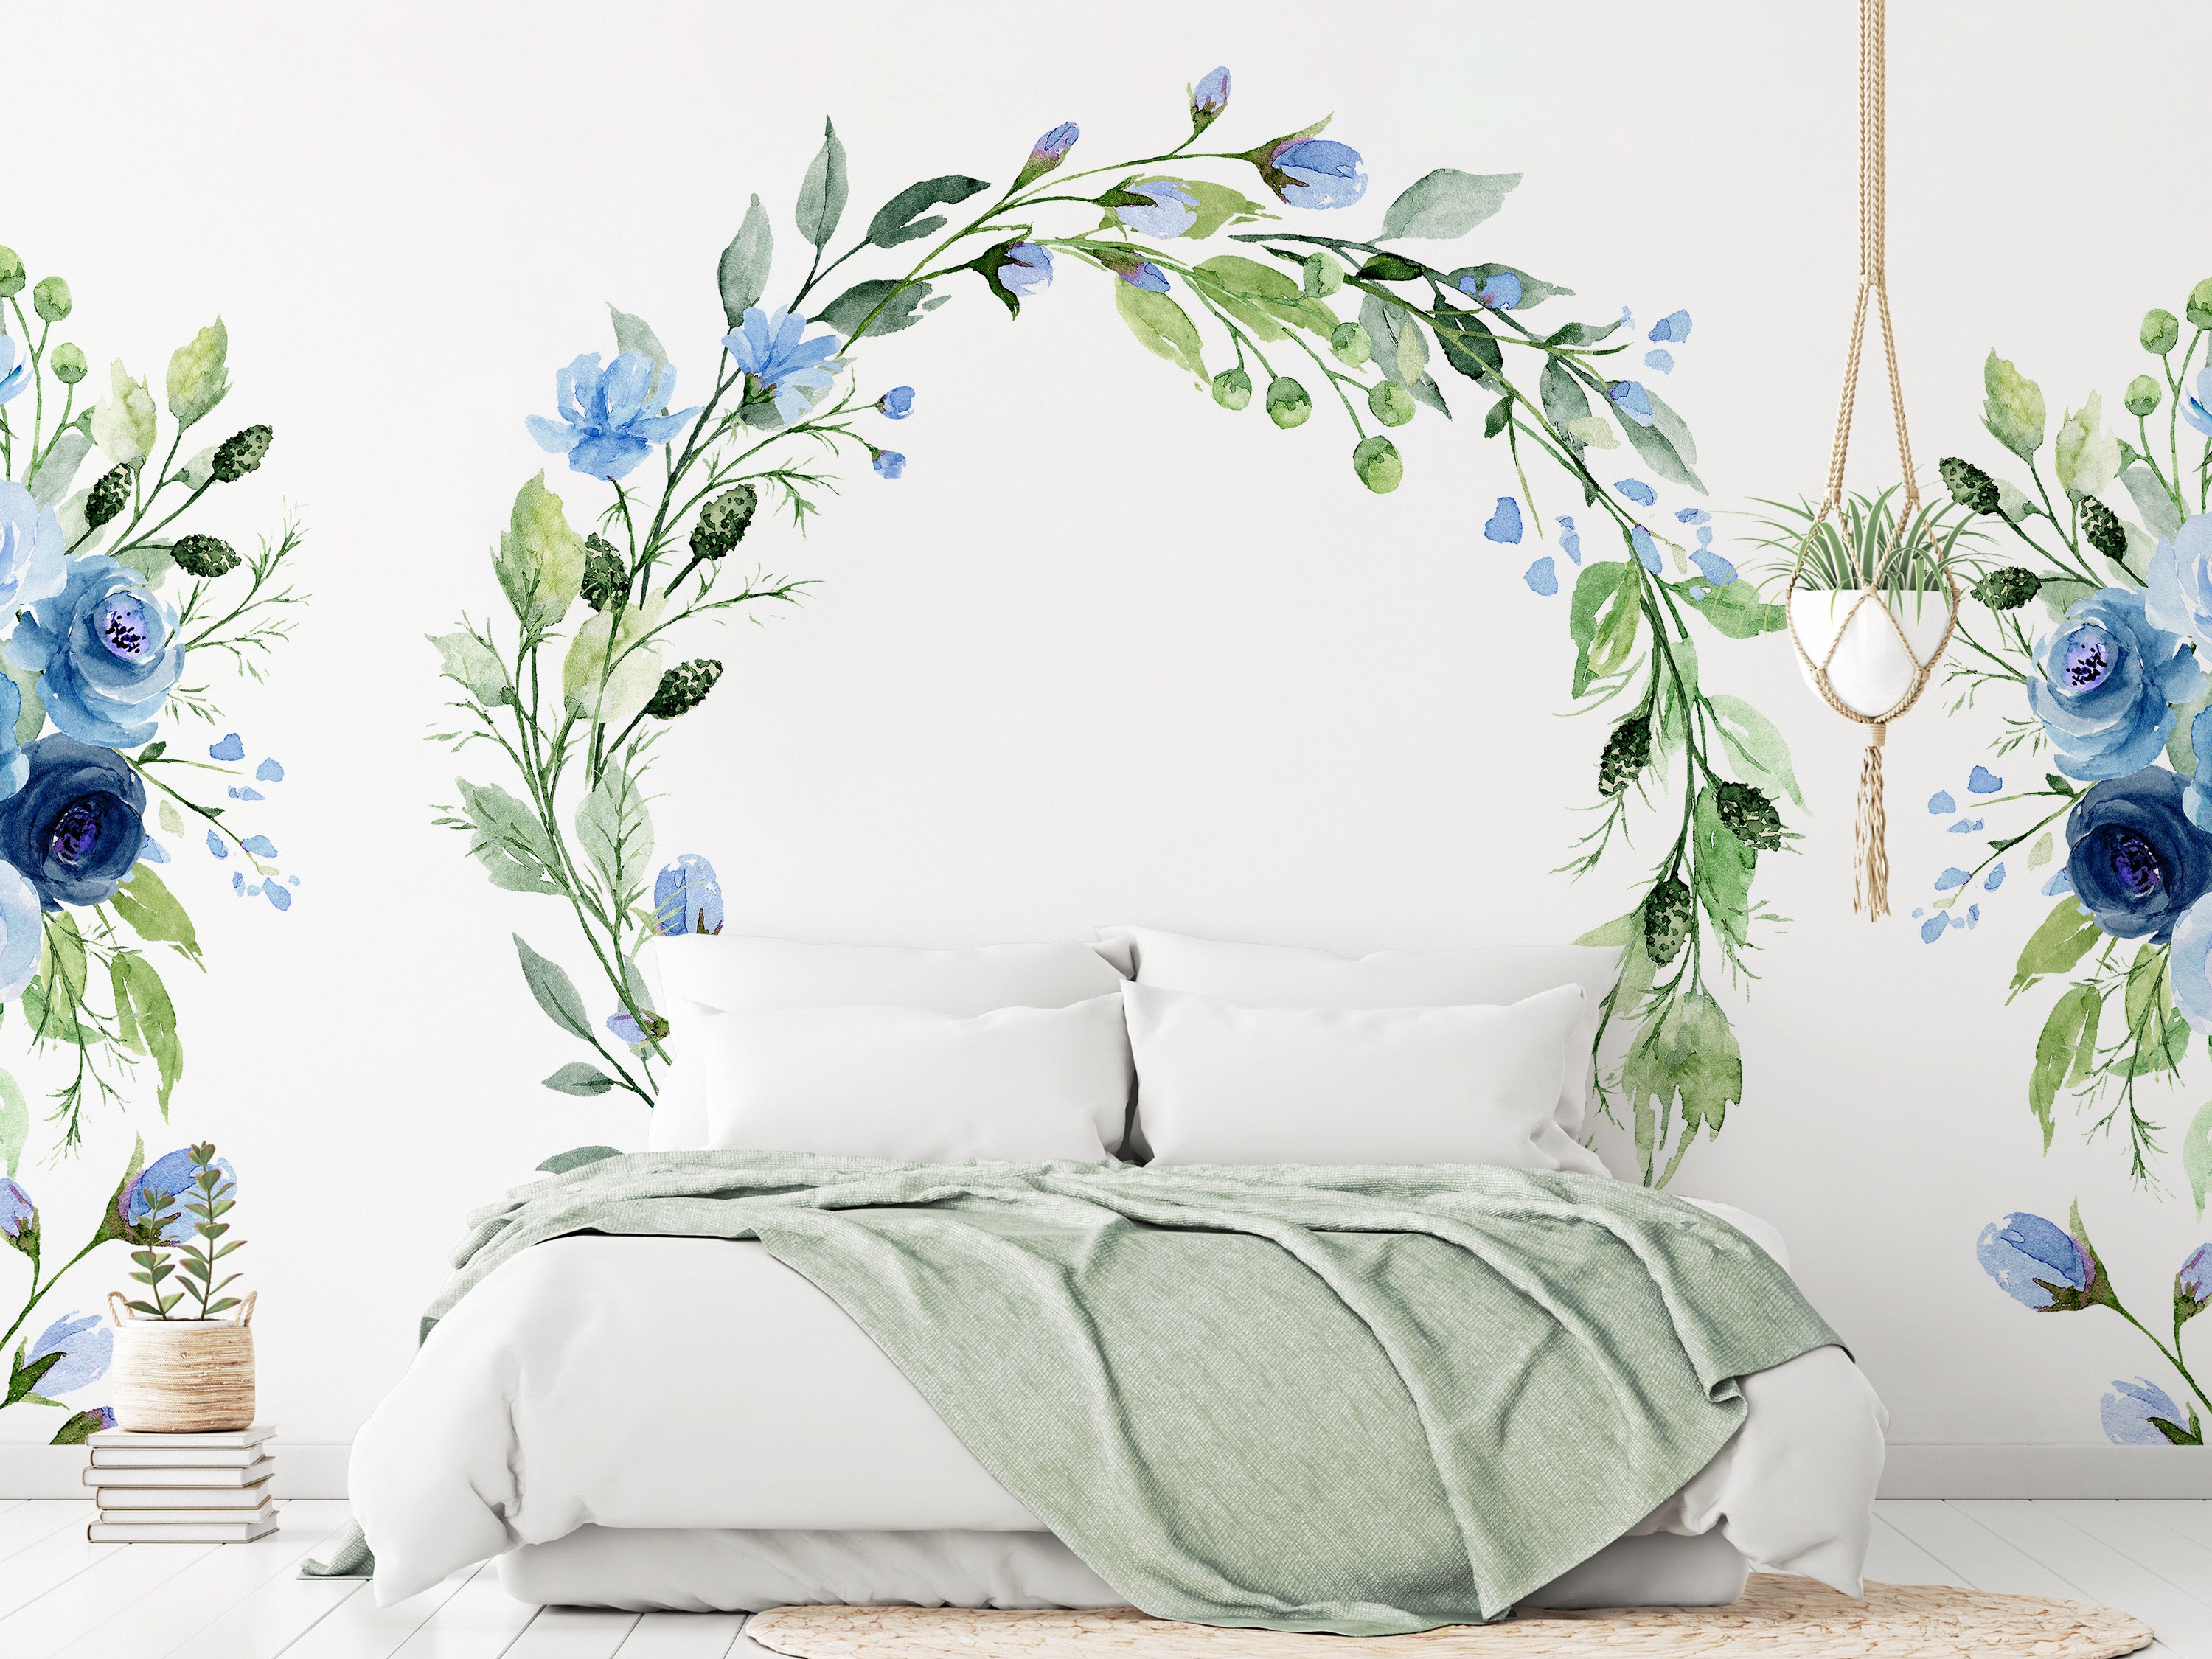 Floral Wallpaper Wall Mural - Romantic Wreath